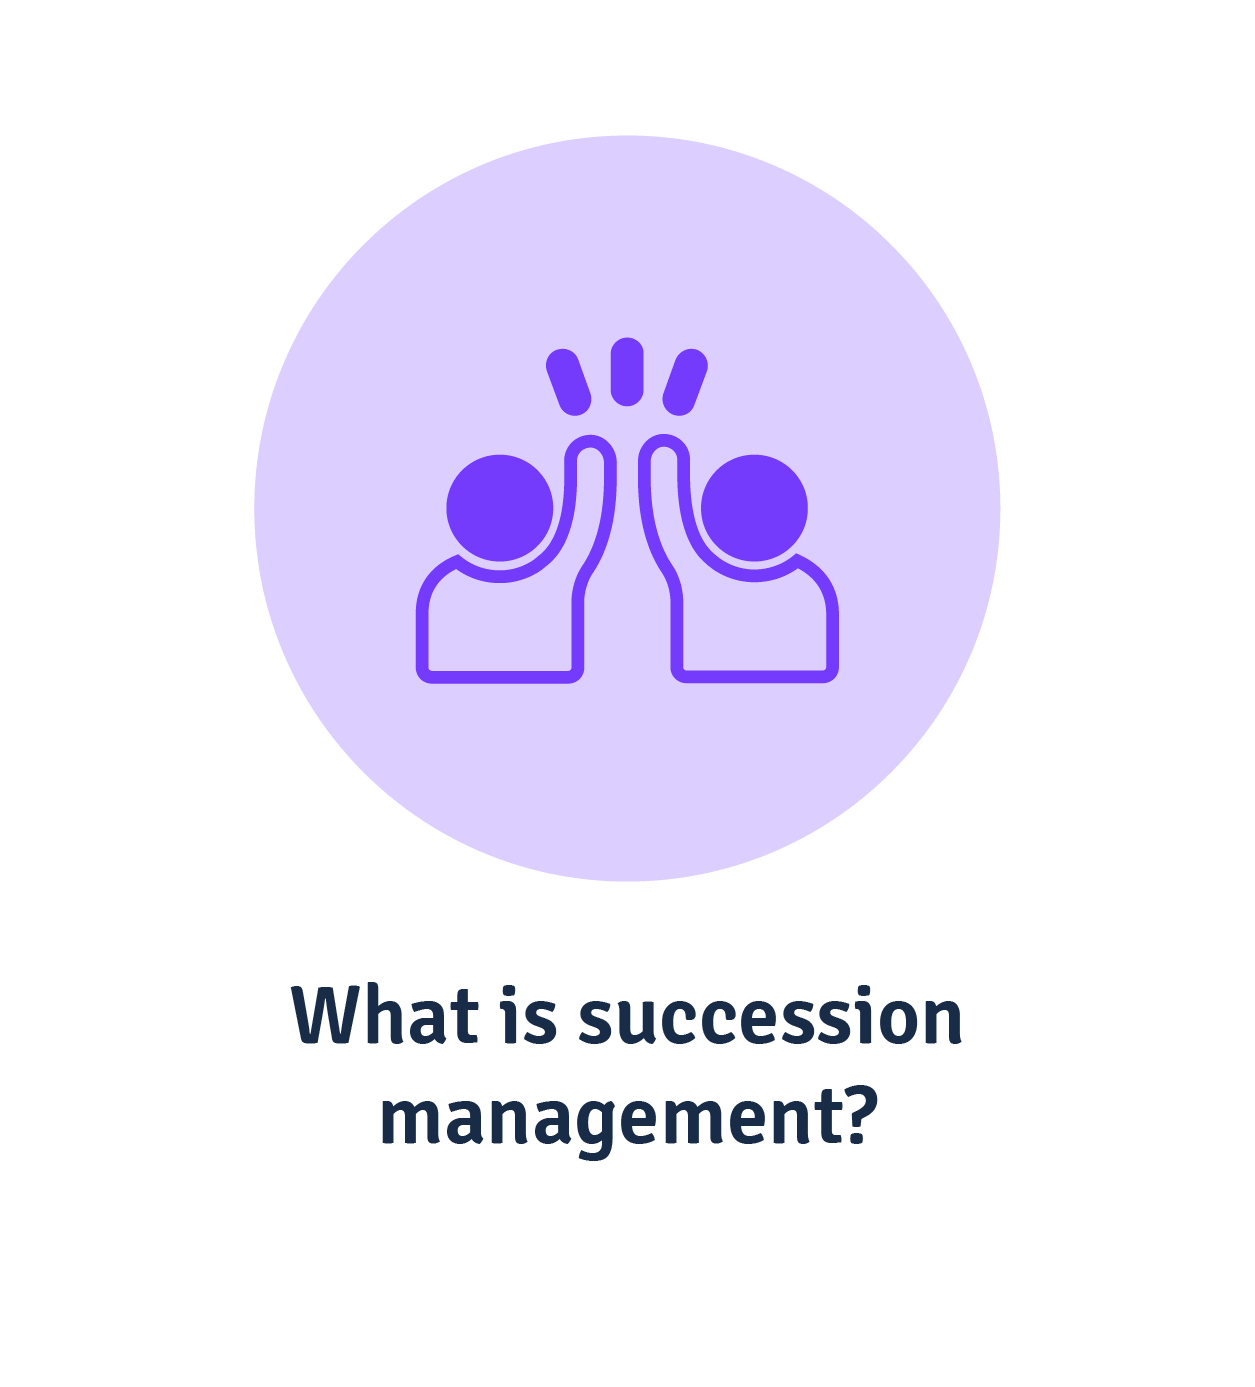 What is succession management?